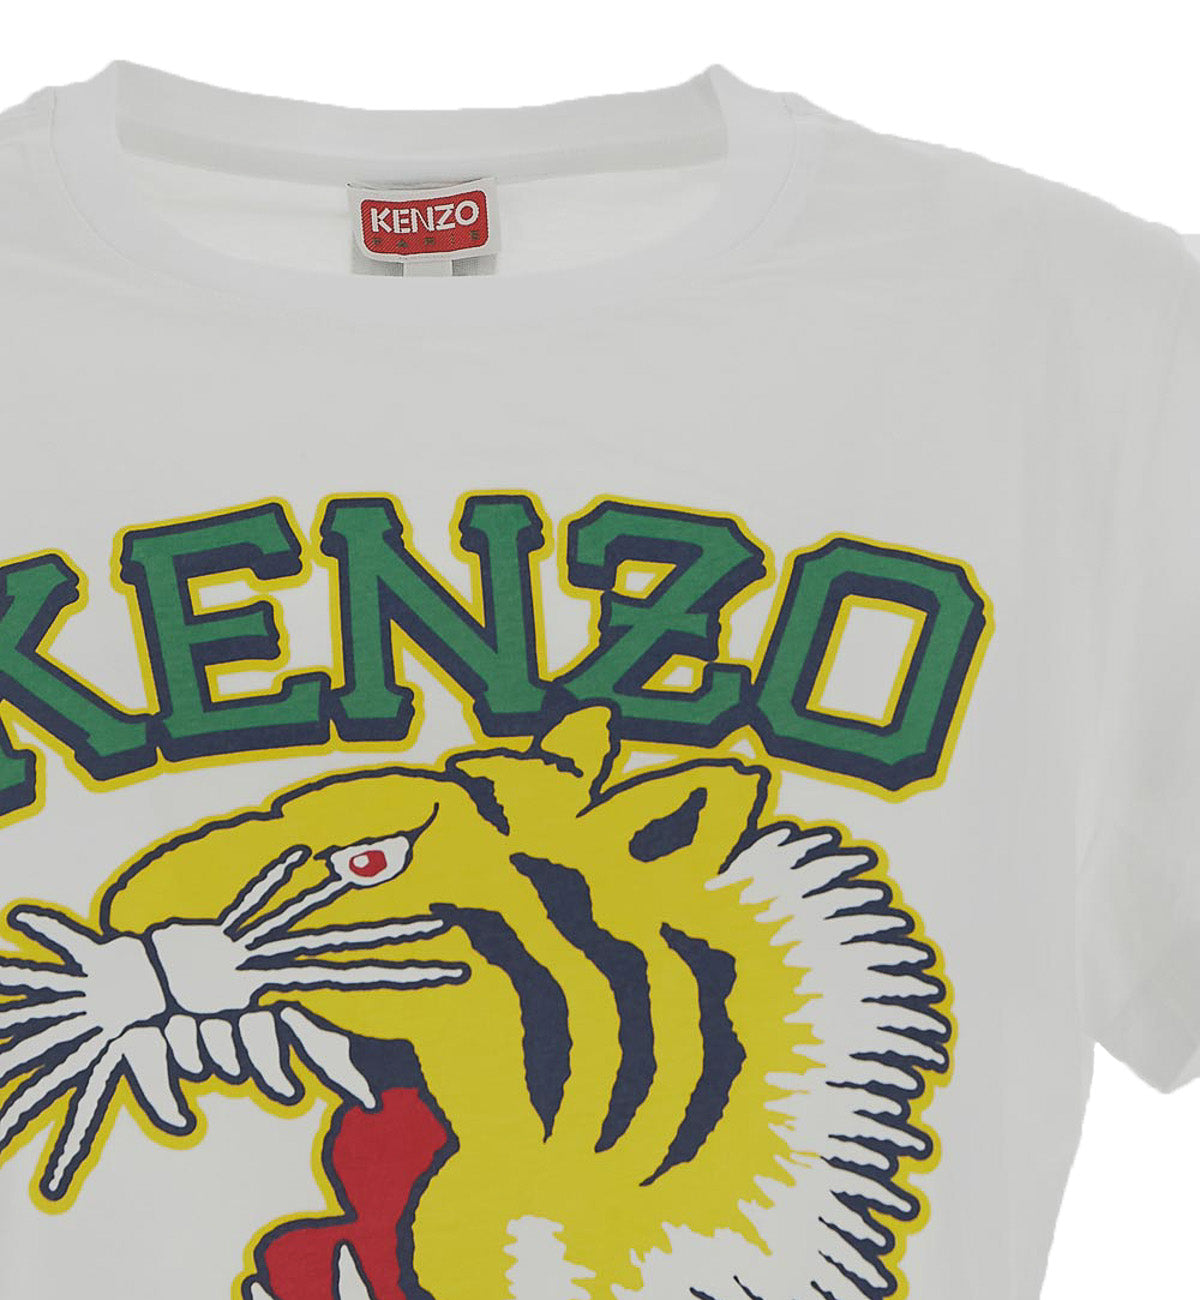 Kenzo Varsity Jungle Tiger Tee (White)